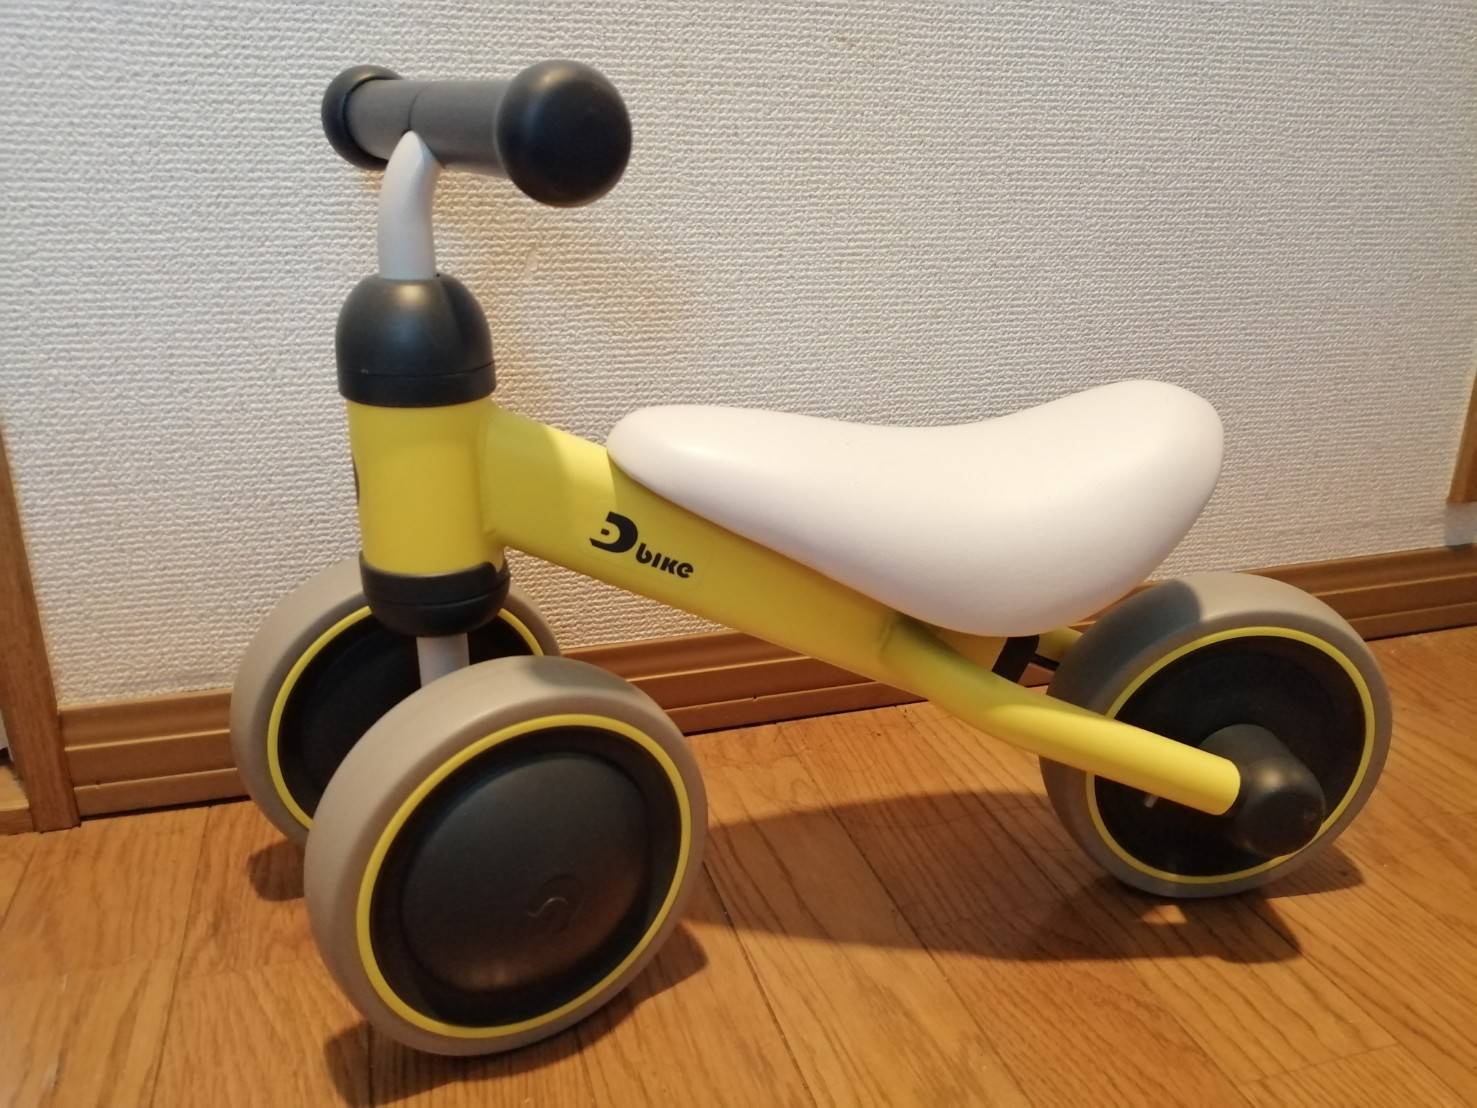 D-bike miniは初めての自転車におすすめ 1歳の娘に購入した感想 | ぱぱのせなか